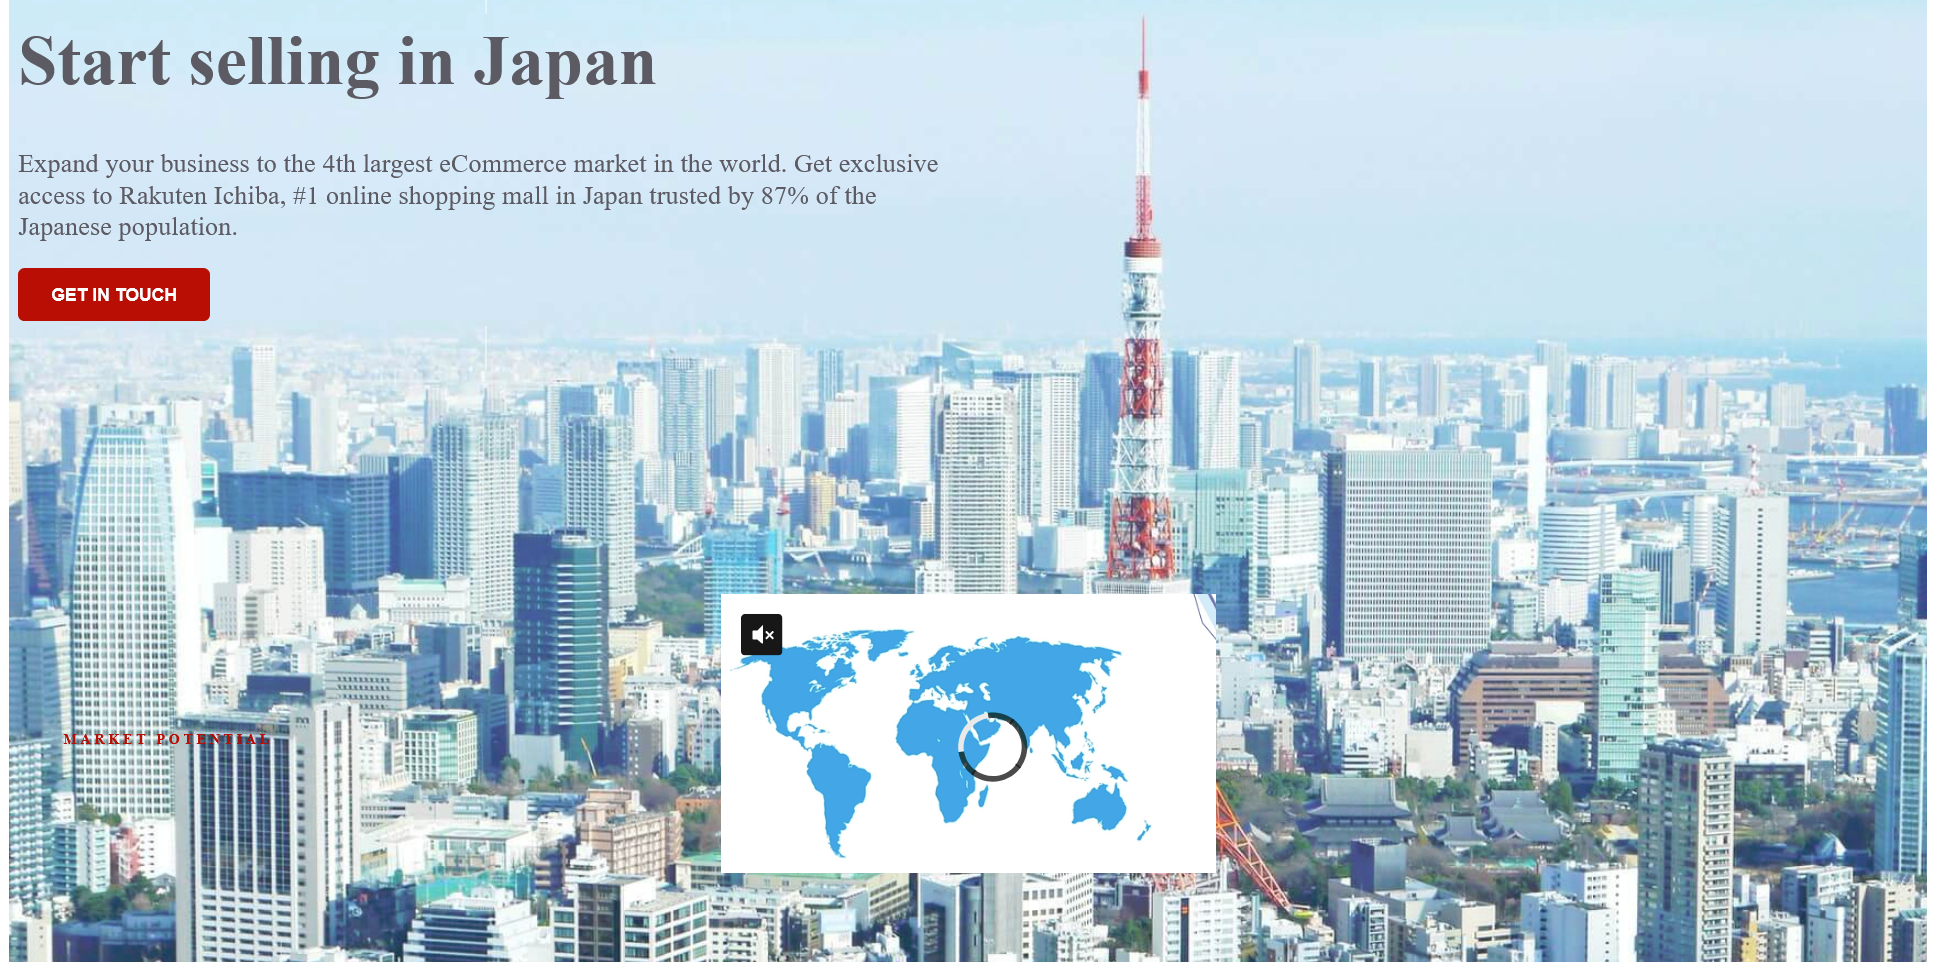 ТОП маркетплейсов по ГЕО: от Германии до Японии